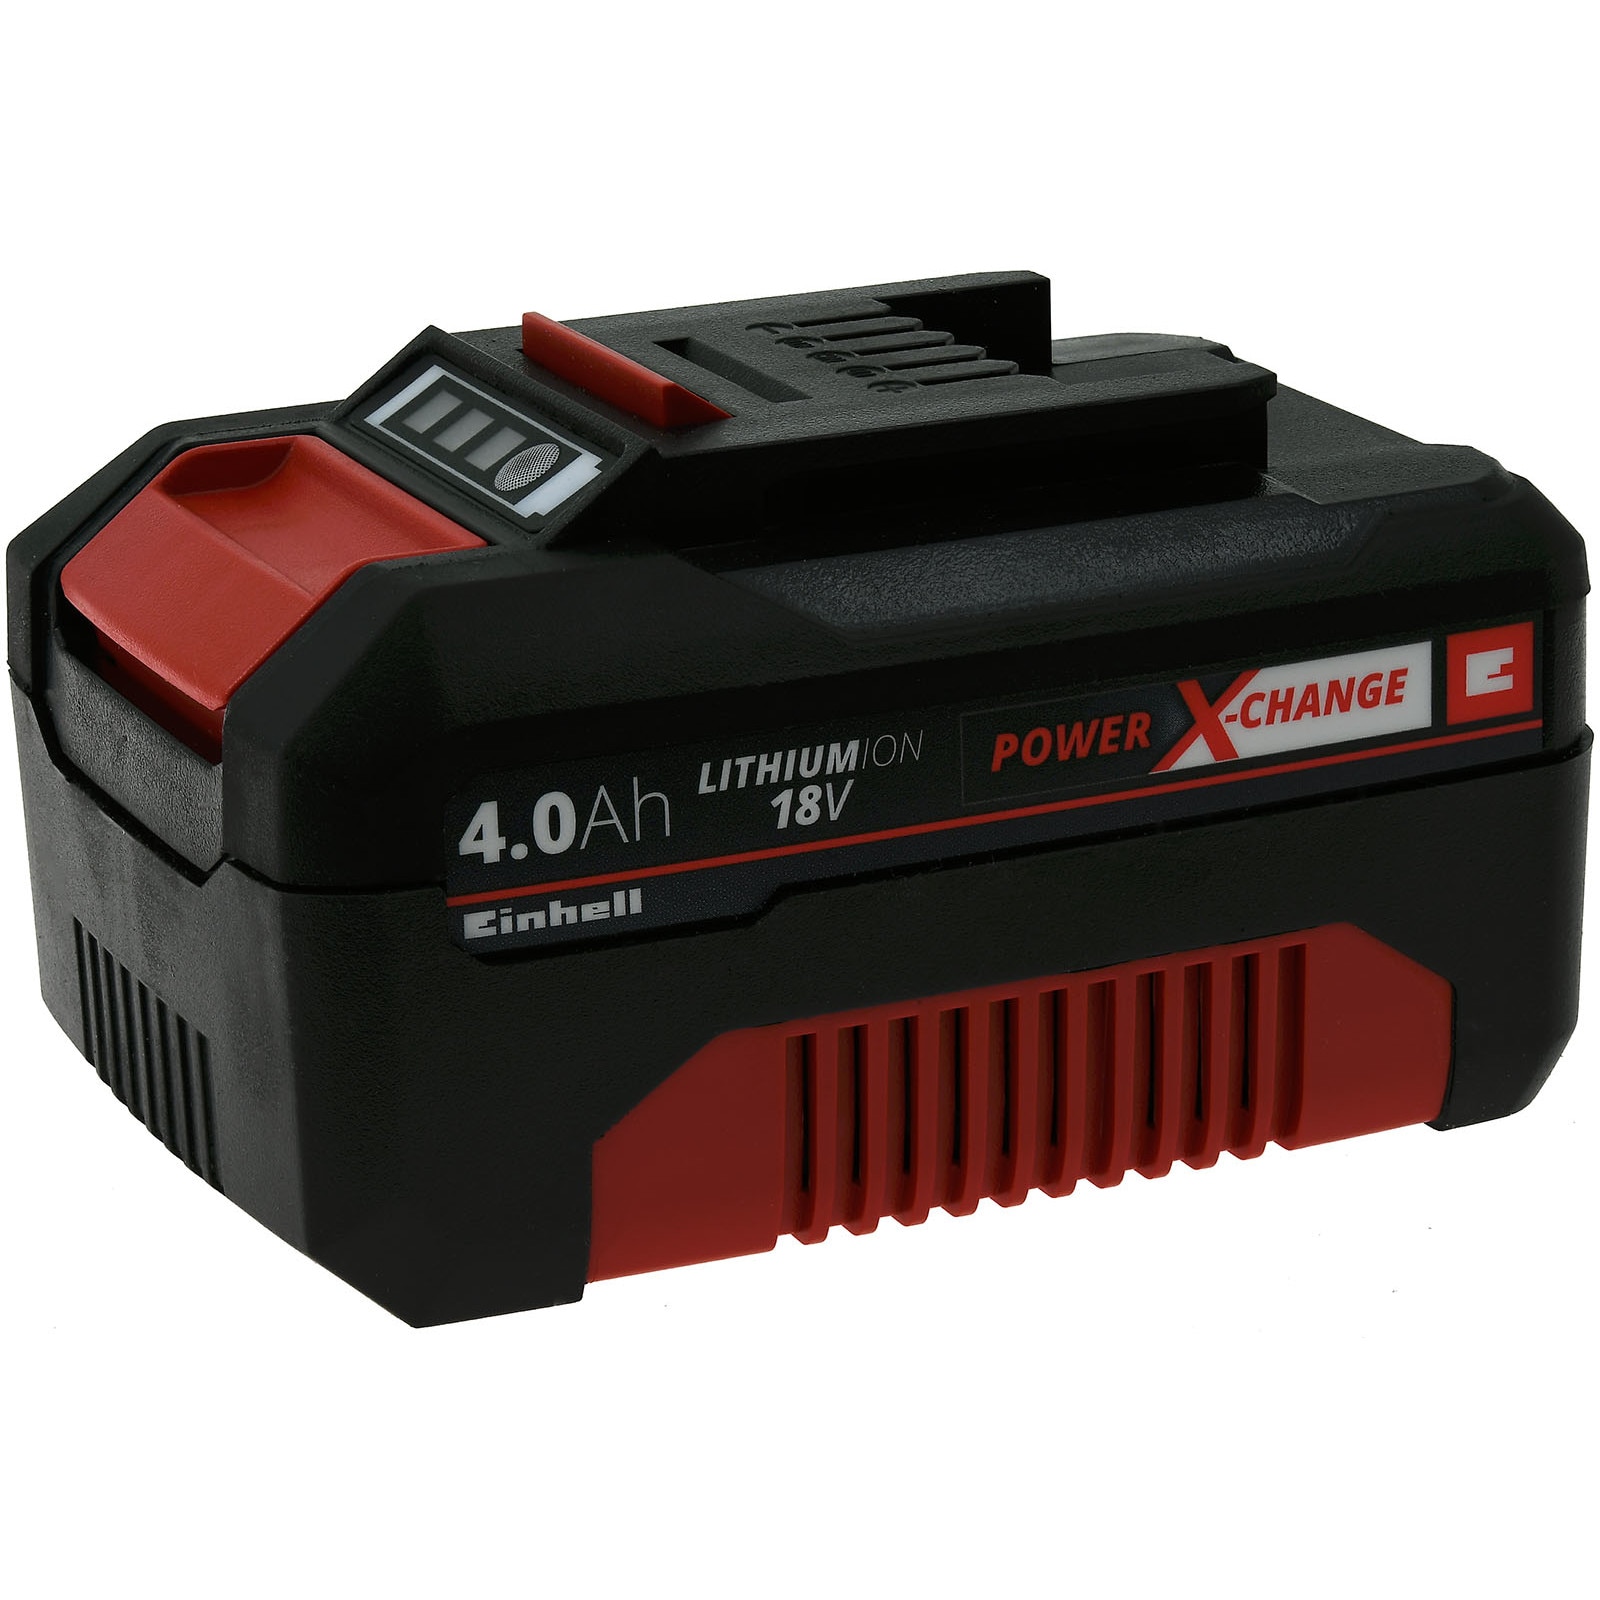 Acumulator original Einhell Power X-Change Li-ion 18V compatibil Power X-Change - eMAG.ro